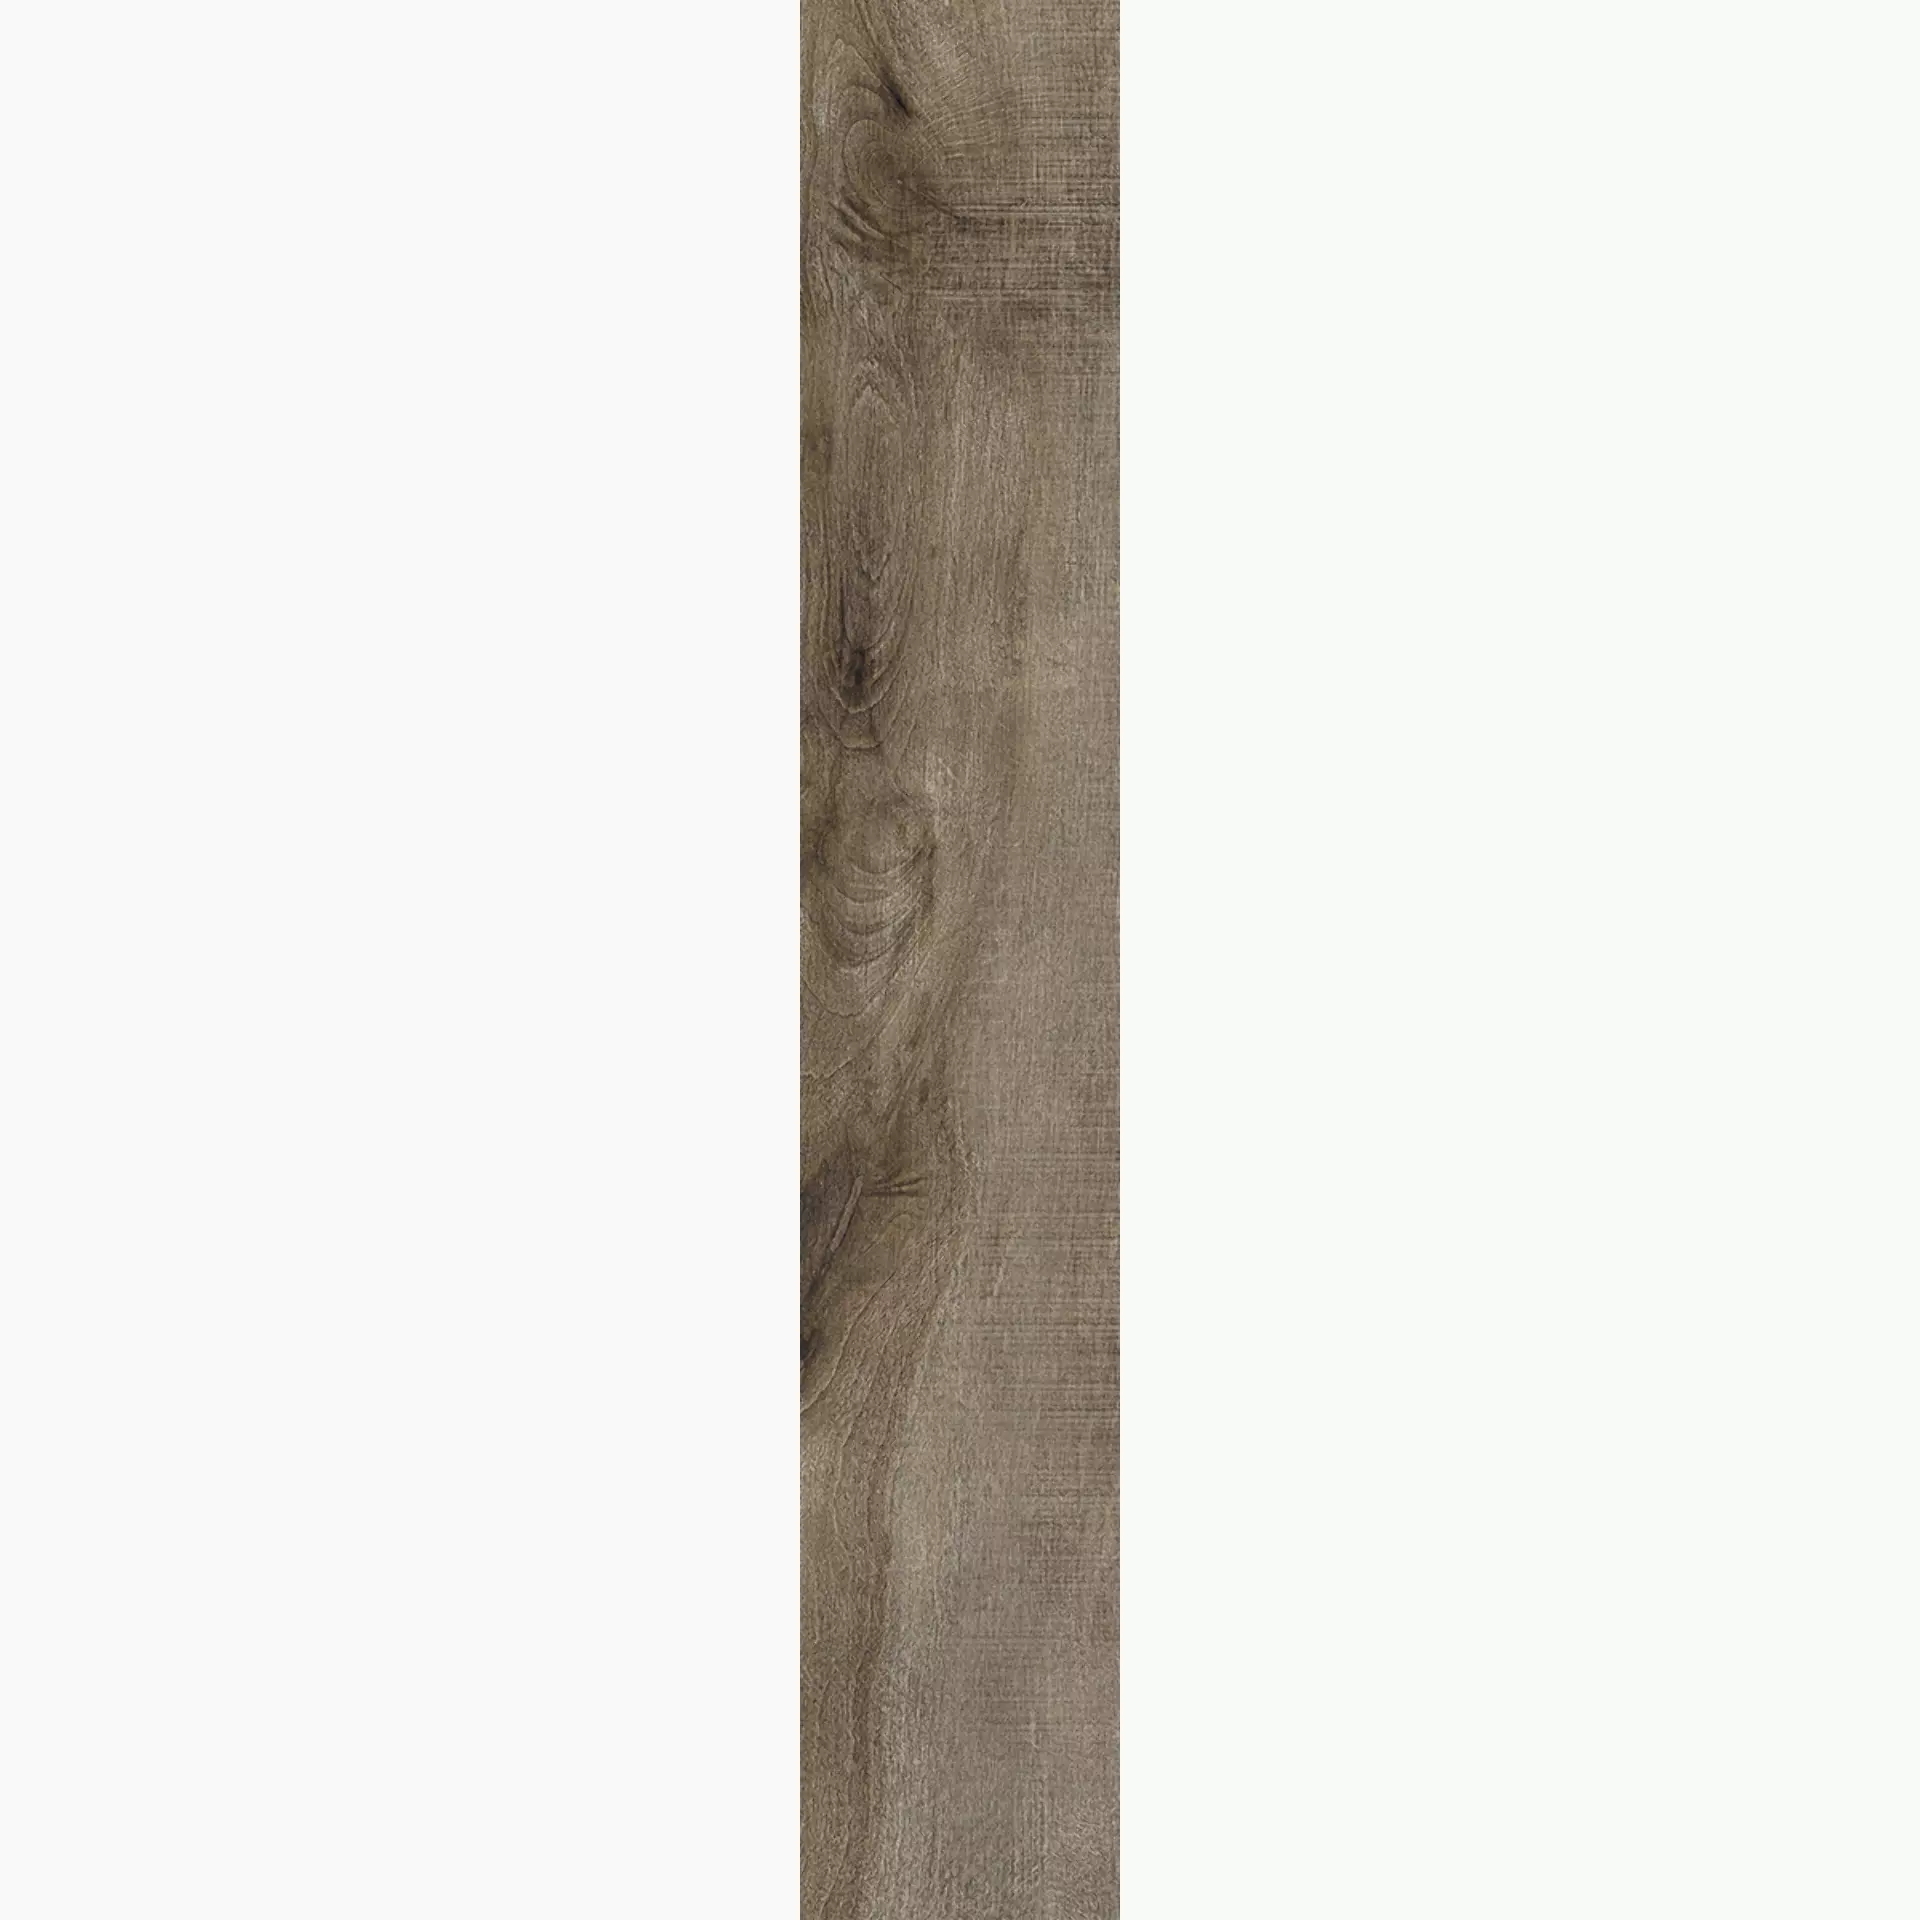 Rondine Greenwood Greige Naturale J86333 7,5x45cm 8,5mm